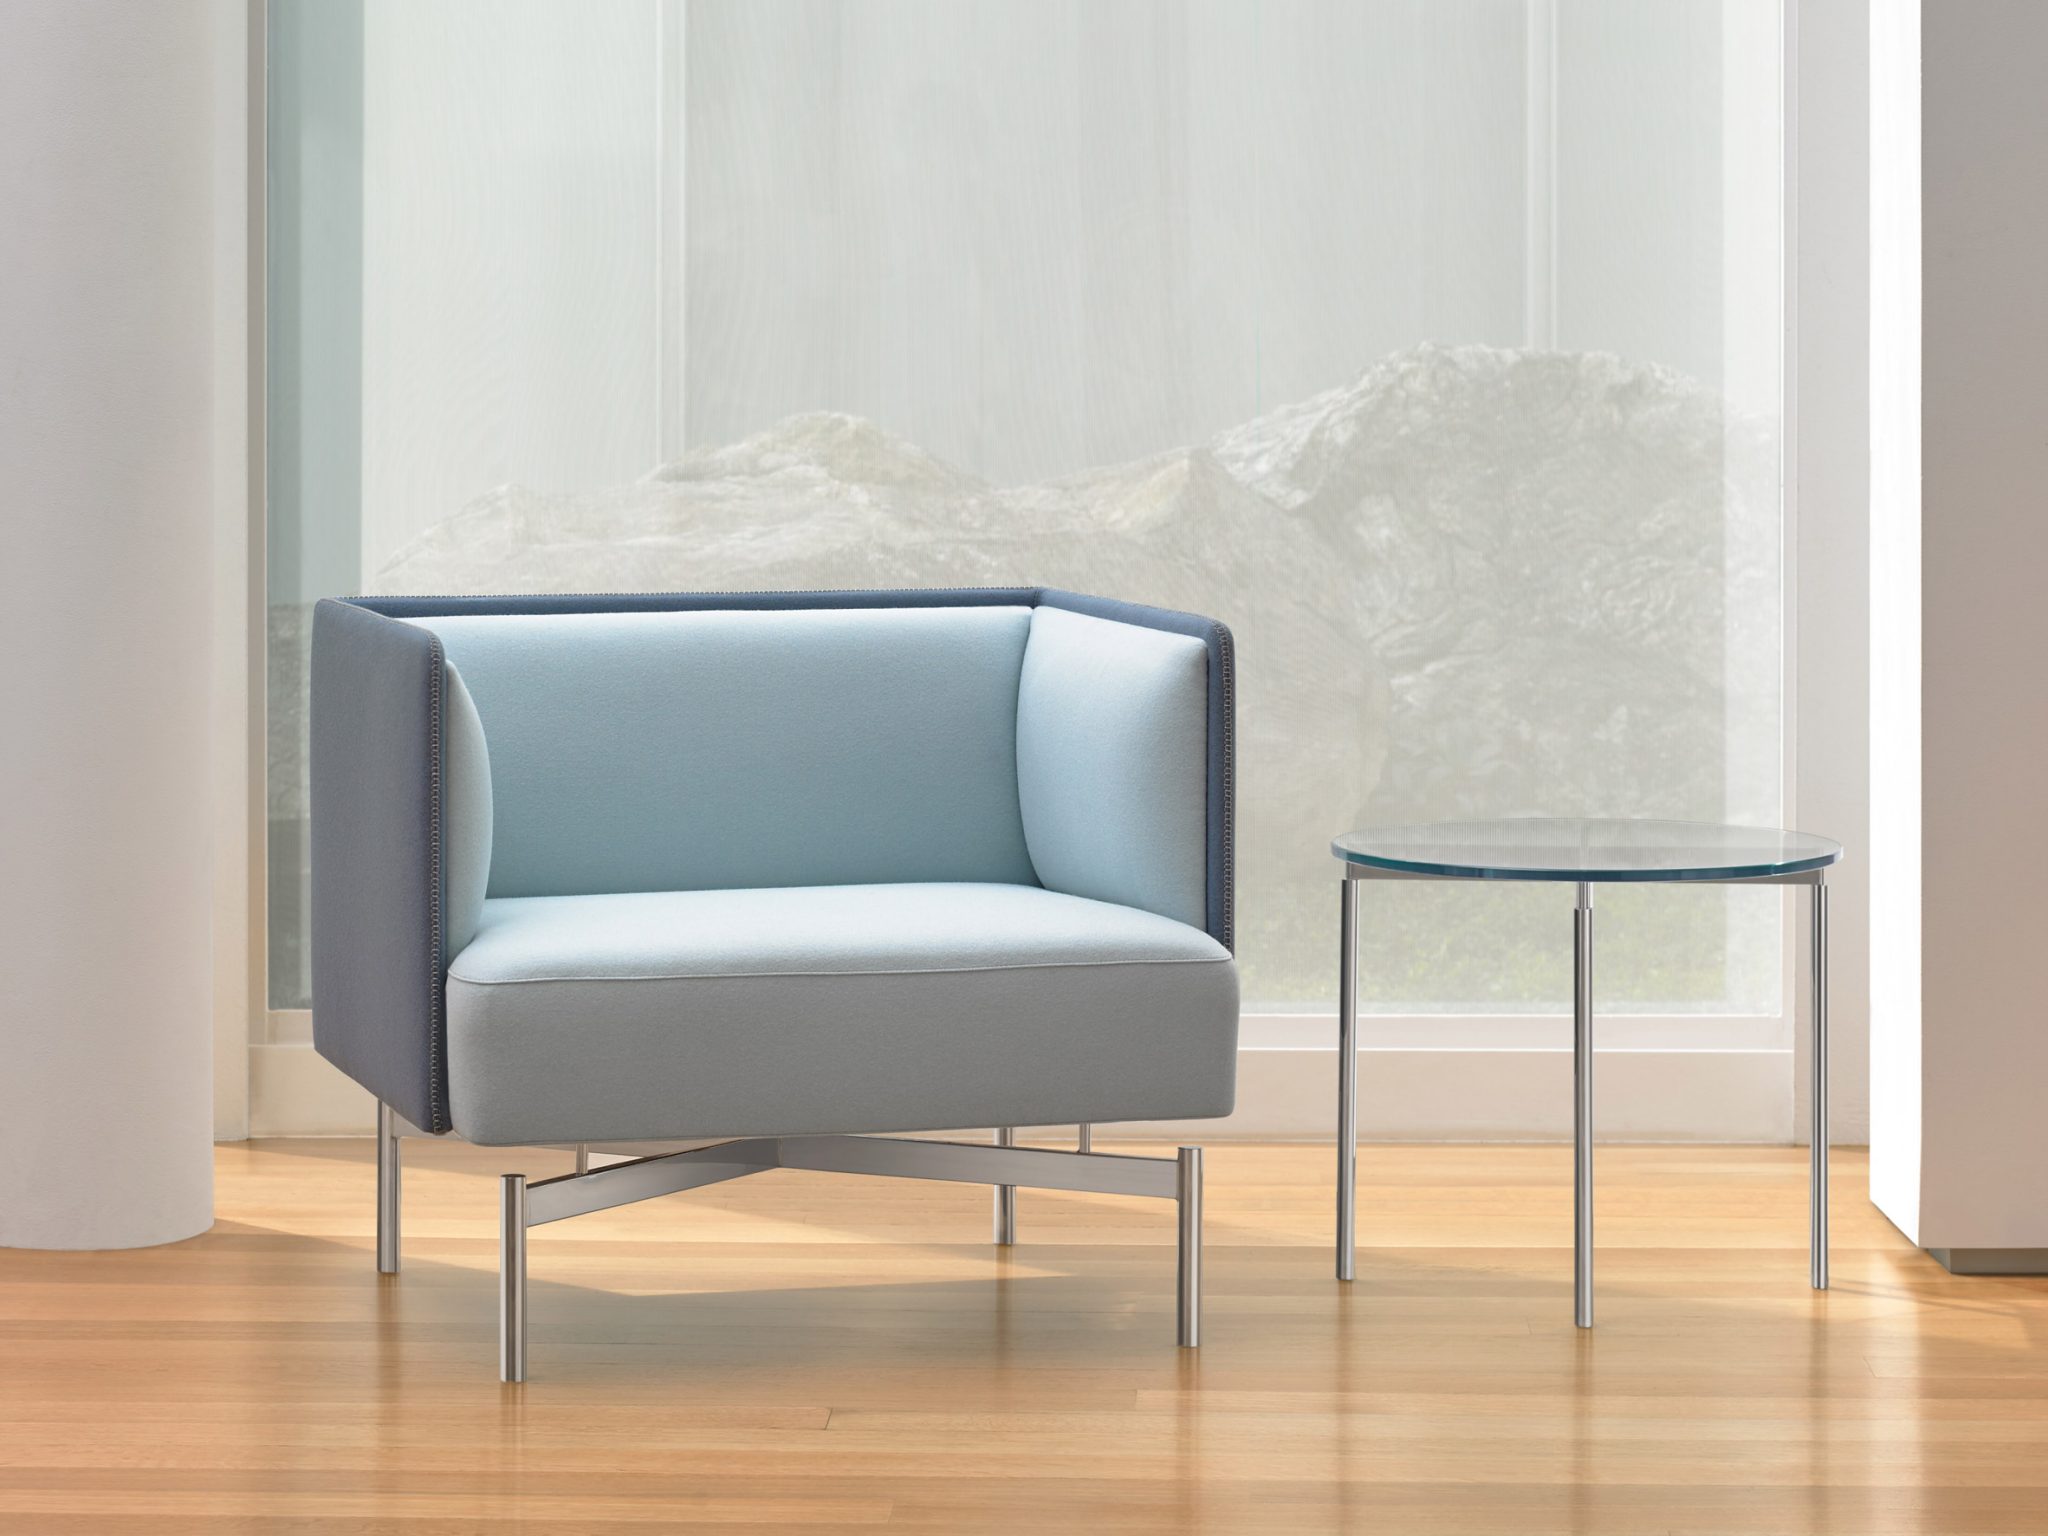 new-collection-charles-pollock-bernhardt-design-new-york-showroom-chair-furniture-design_dezeen_2364_col_1